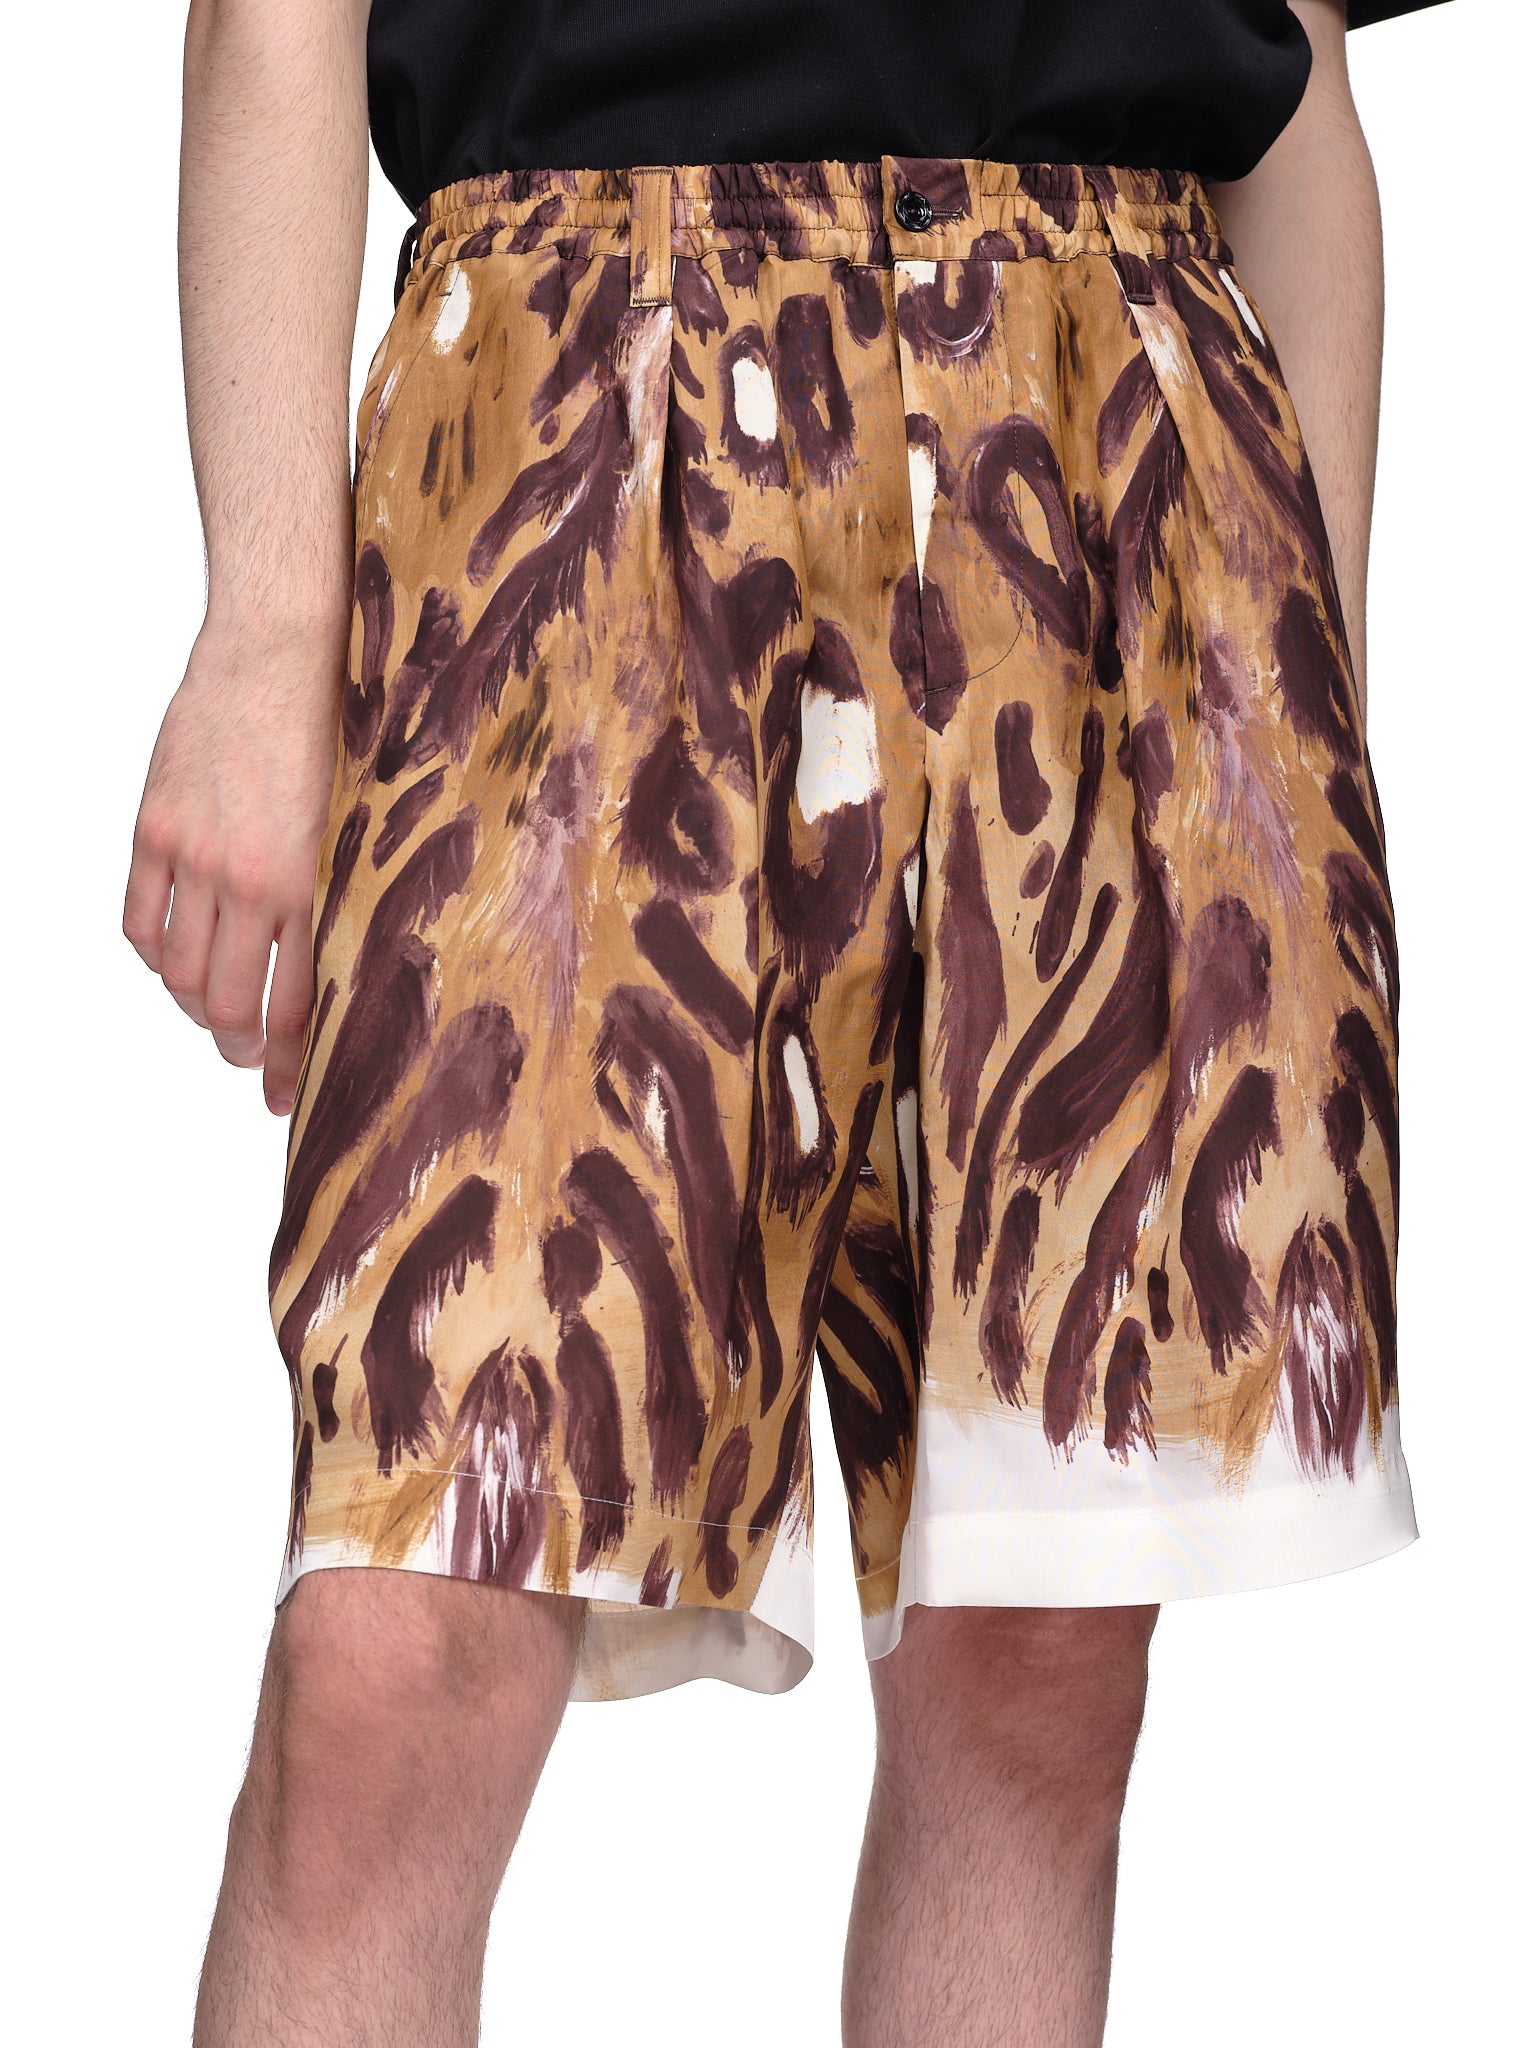 Marni Leopard Shorts | H.Lorenzo - detail 1